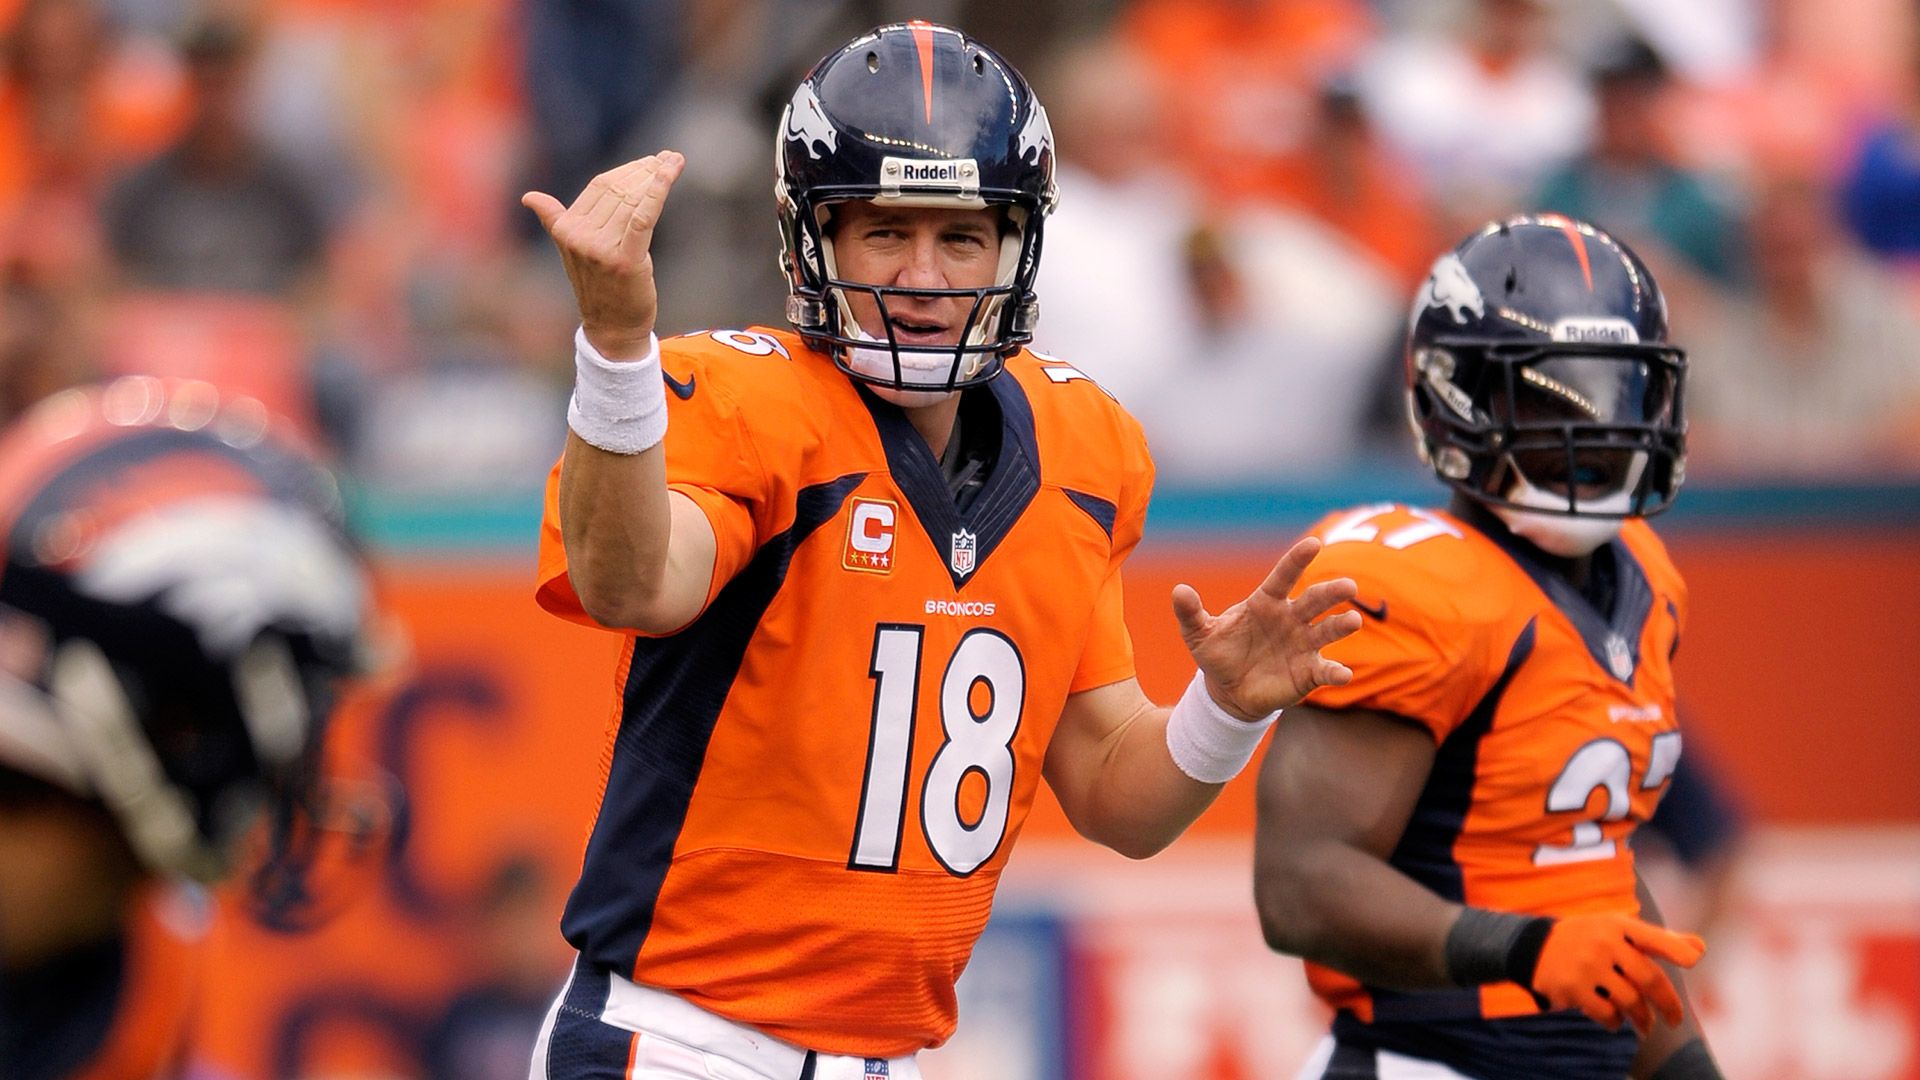 Peyton Manning takes over in 3rd quarter for Brock Osweiler as Denver Broncos' QB